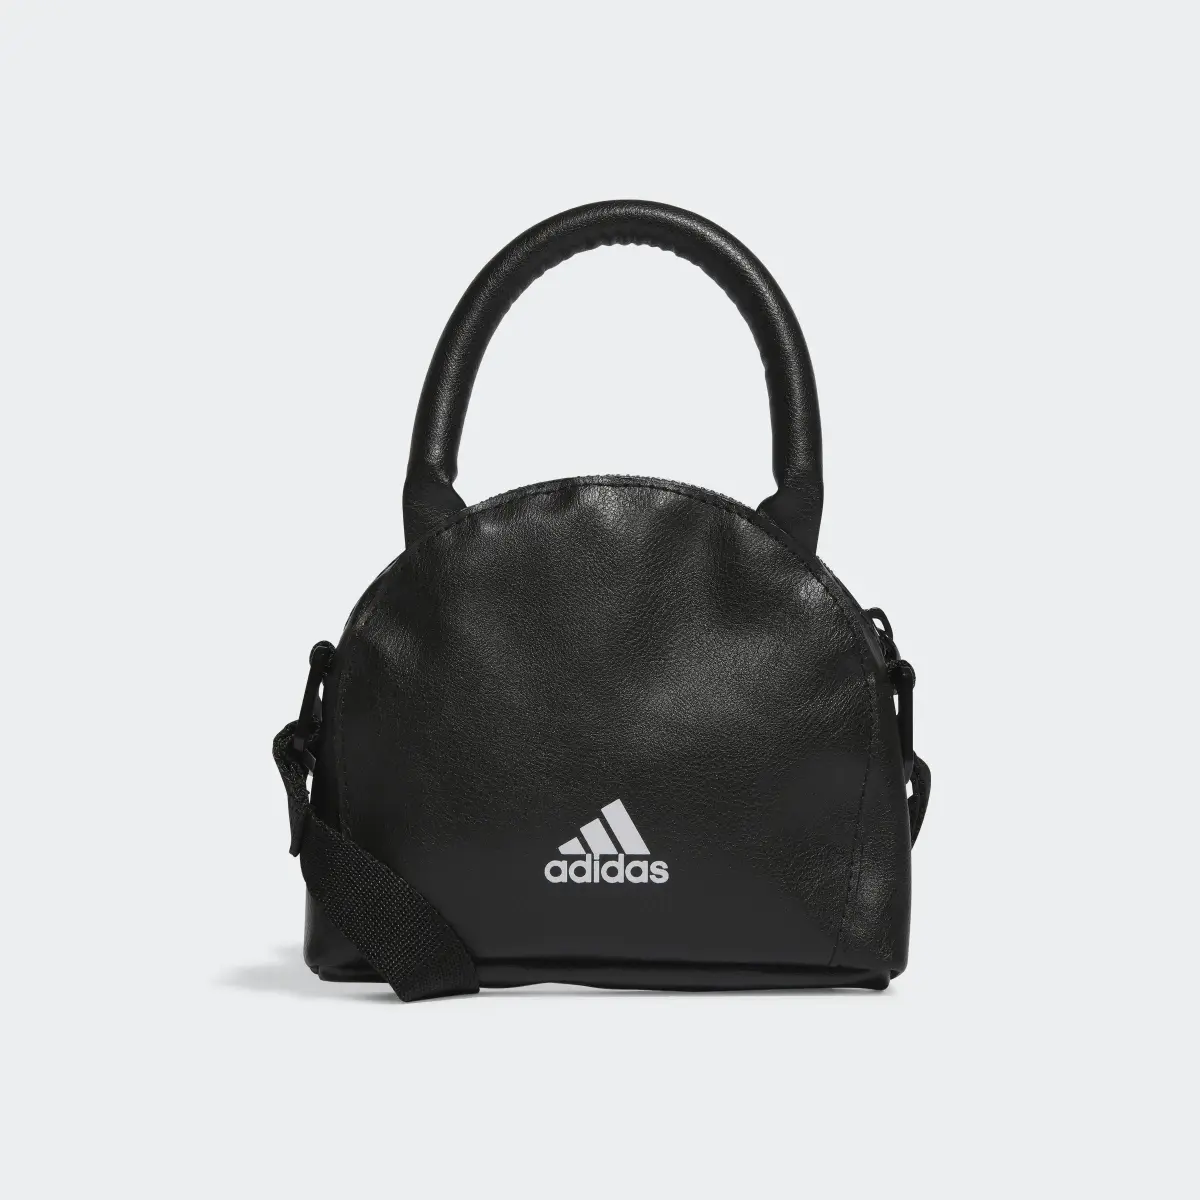 Adidas Back to School Small Bag. 2